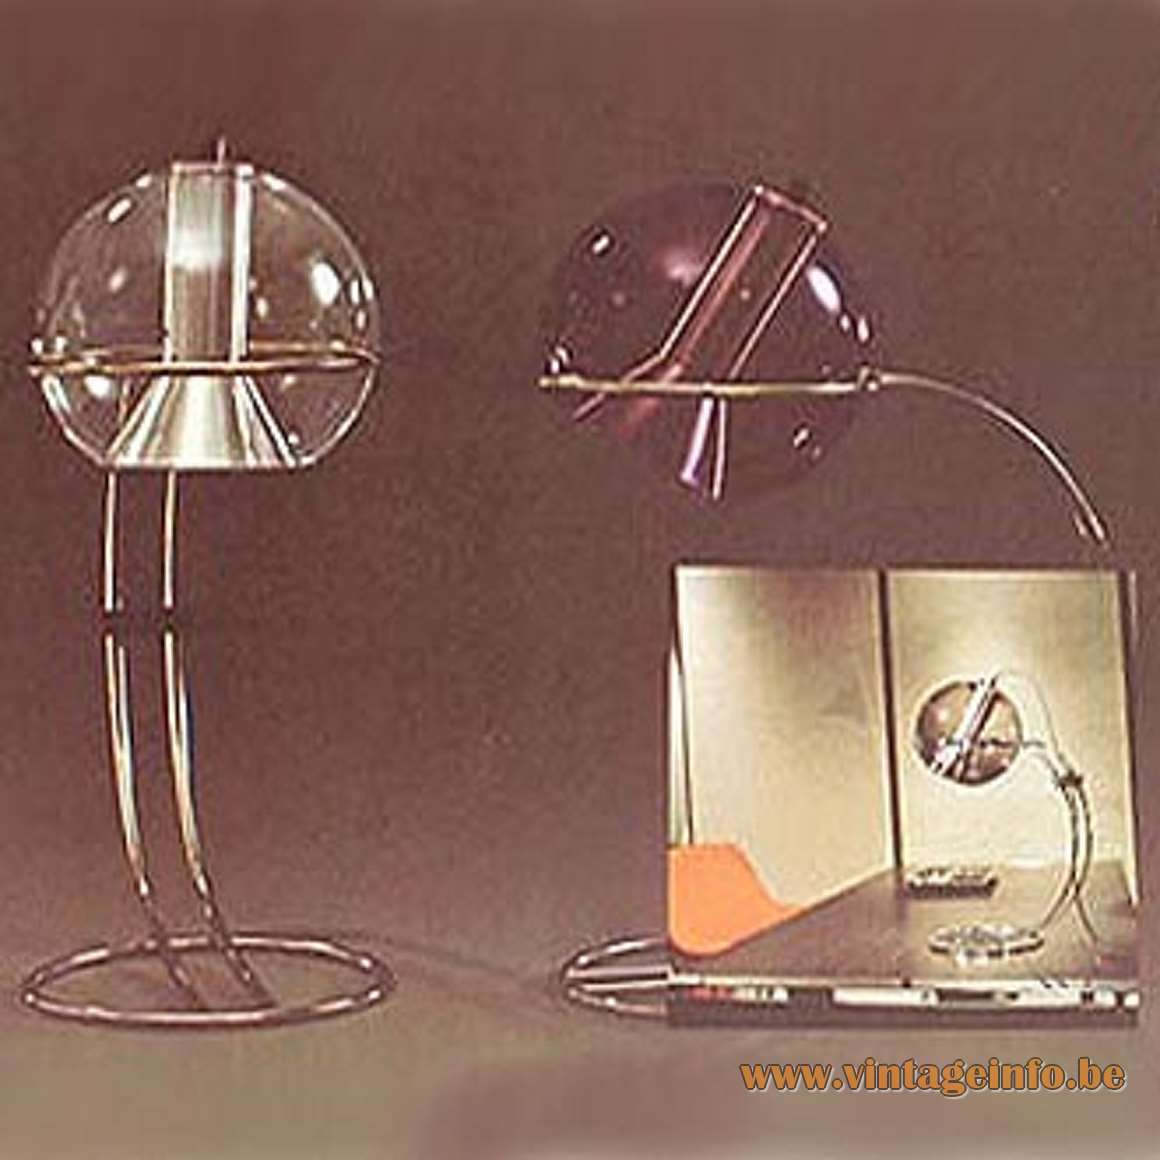 Raak Tropic table lamp smoked glass globe catalogue 1973 design Frank Ligtelijn Amsterdam 1970s MCM